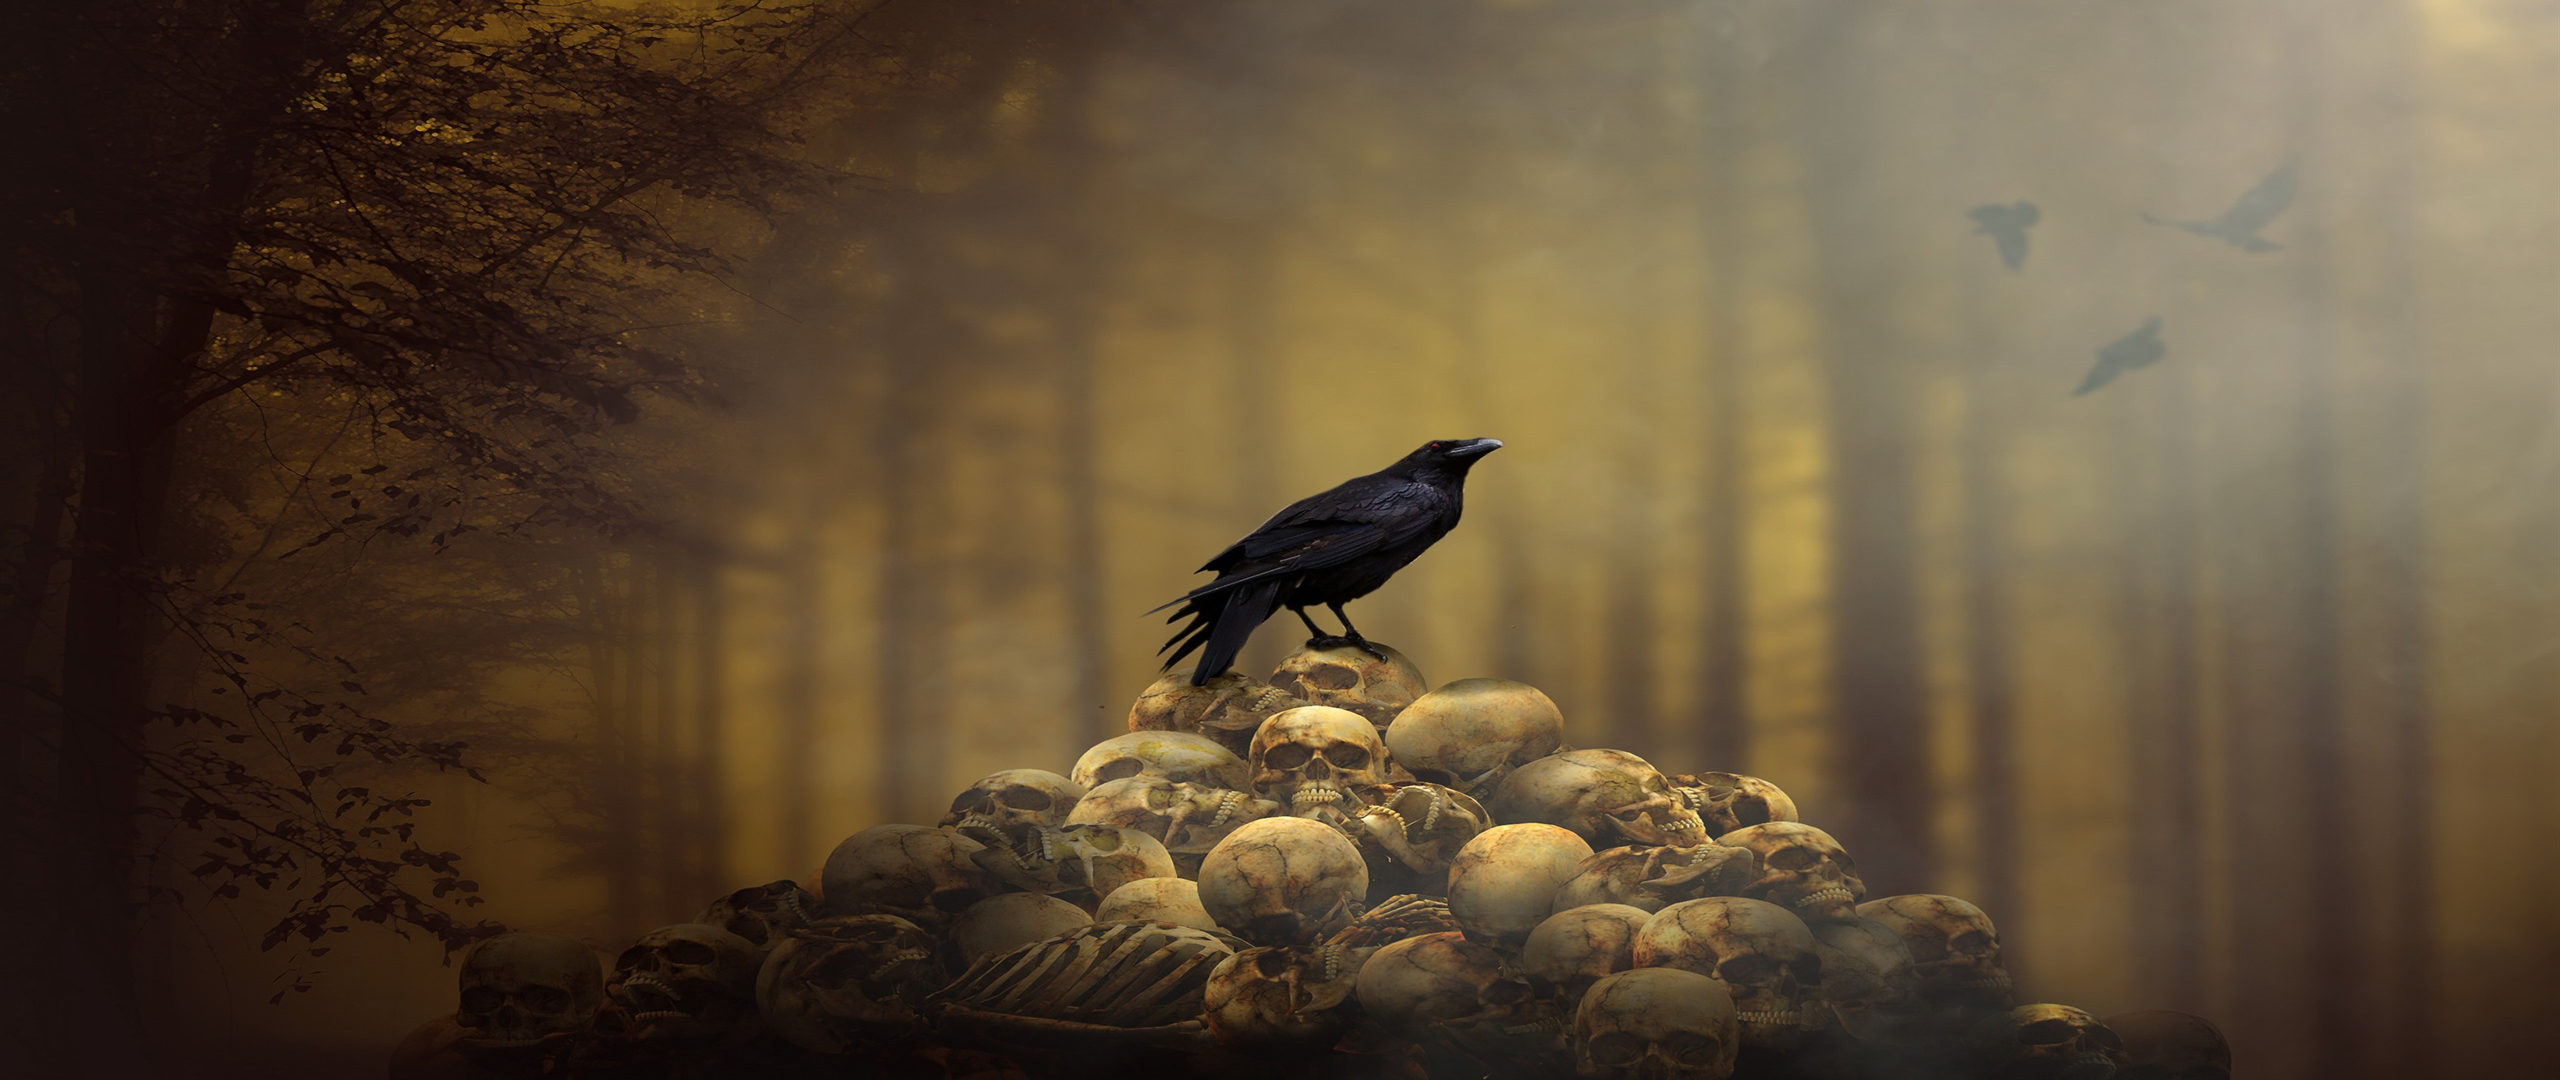 Crow-skulls_2560x16001.png